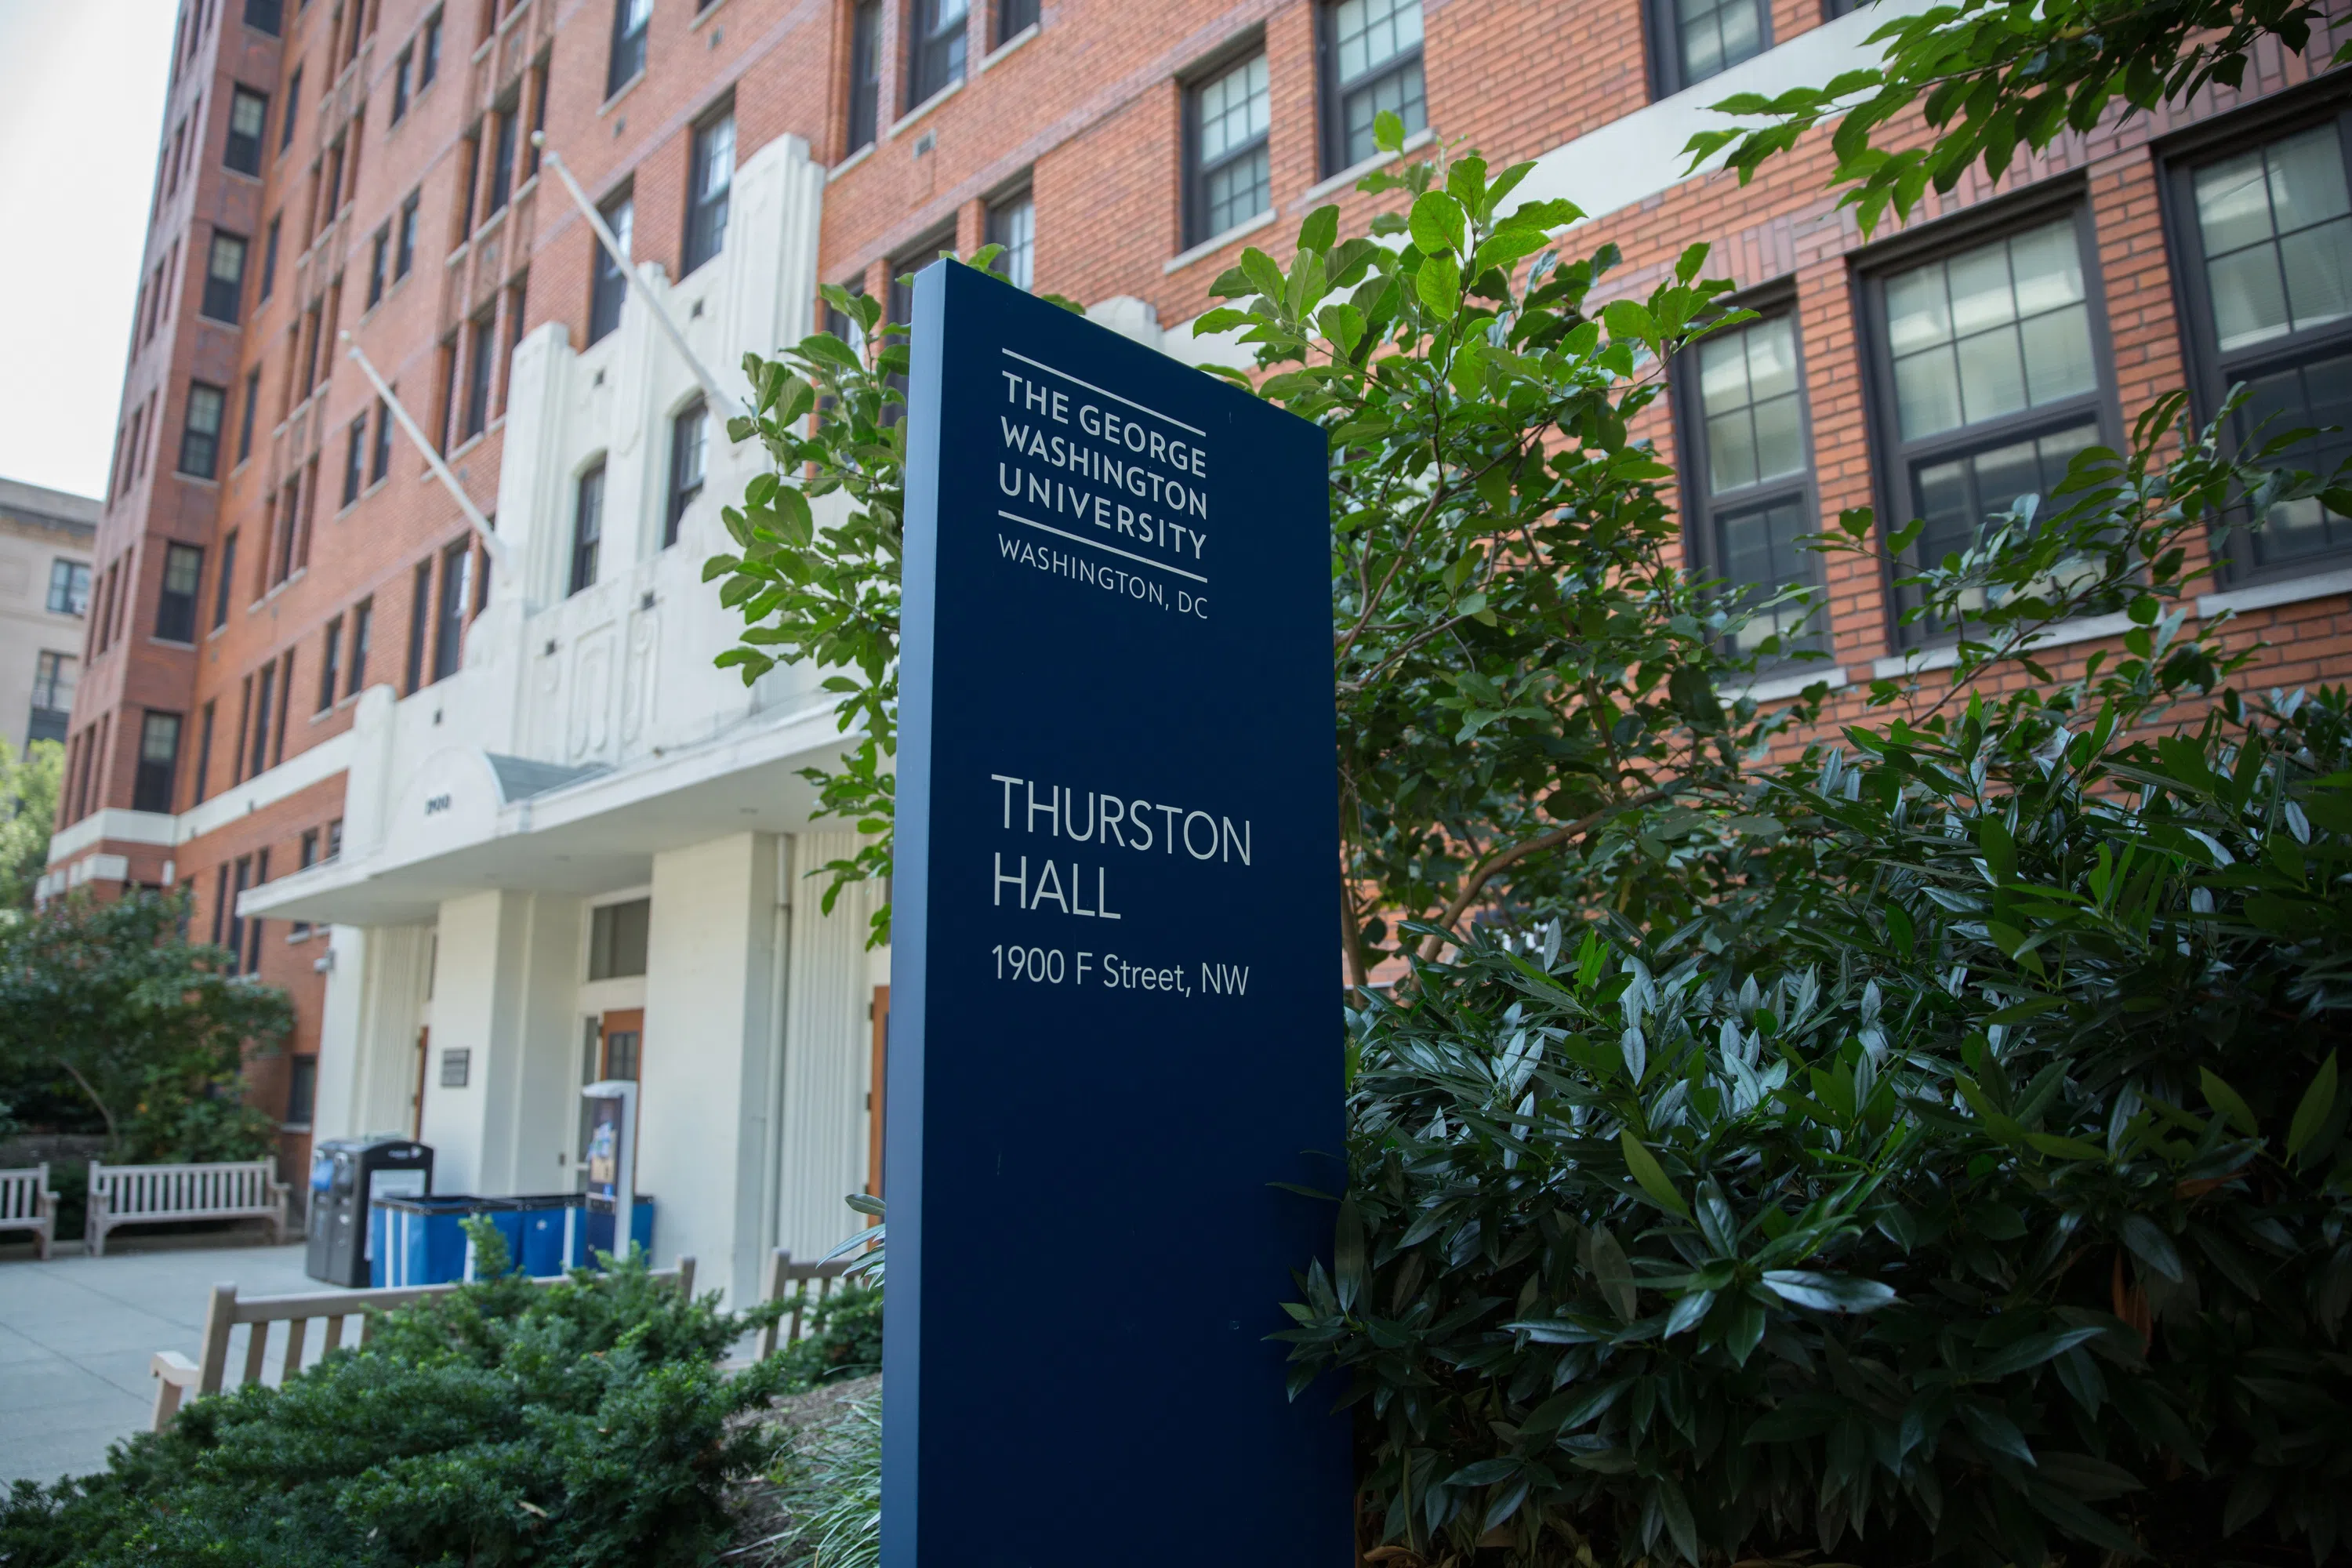 Thurston Hall sign on the exterior